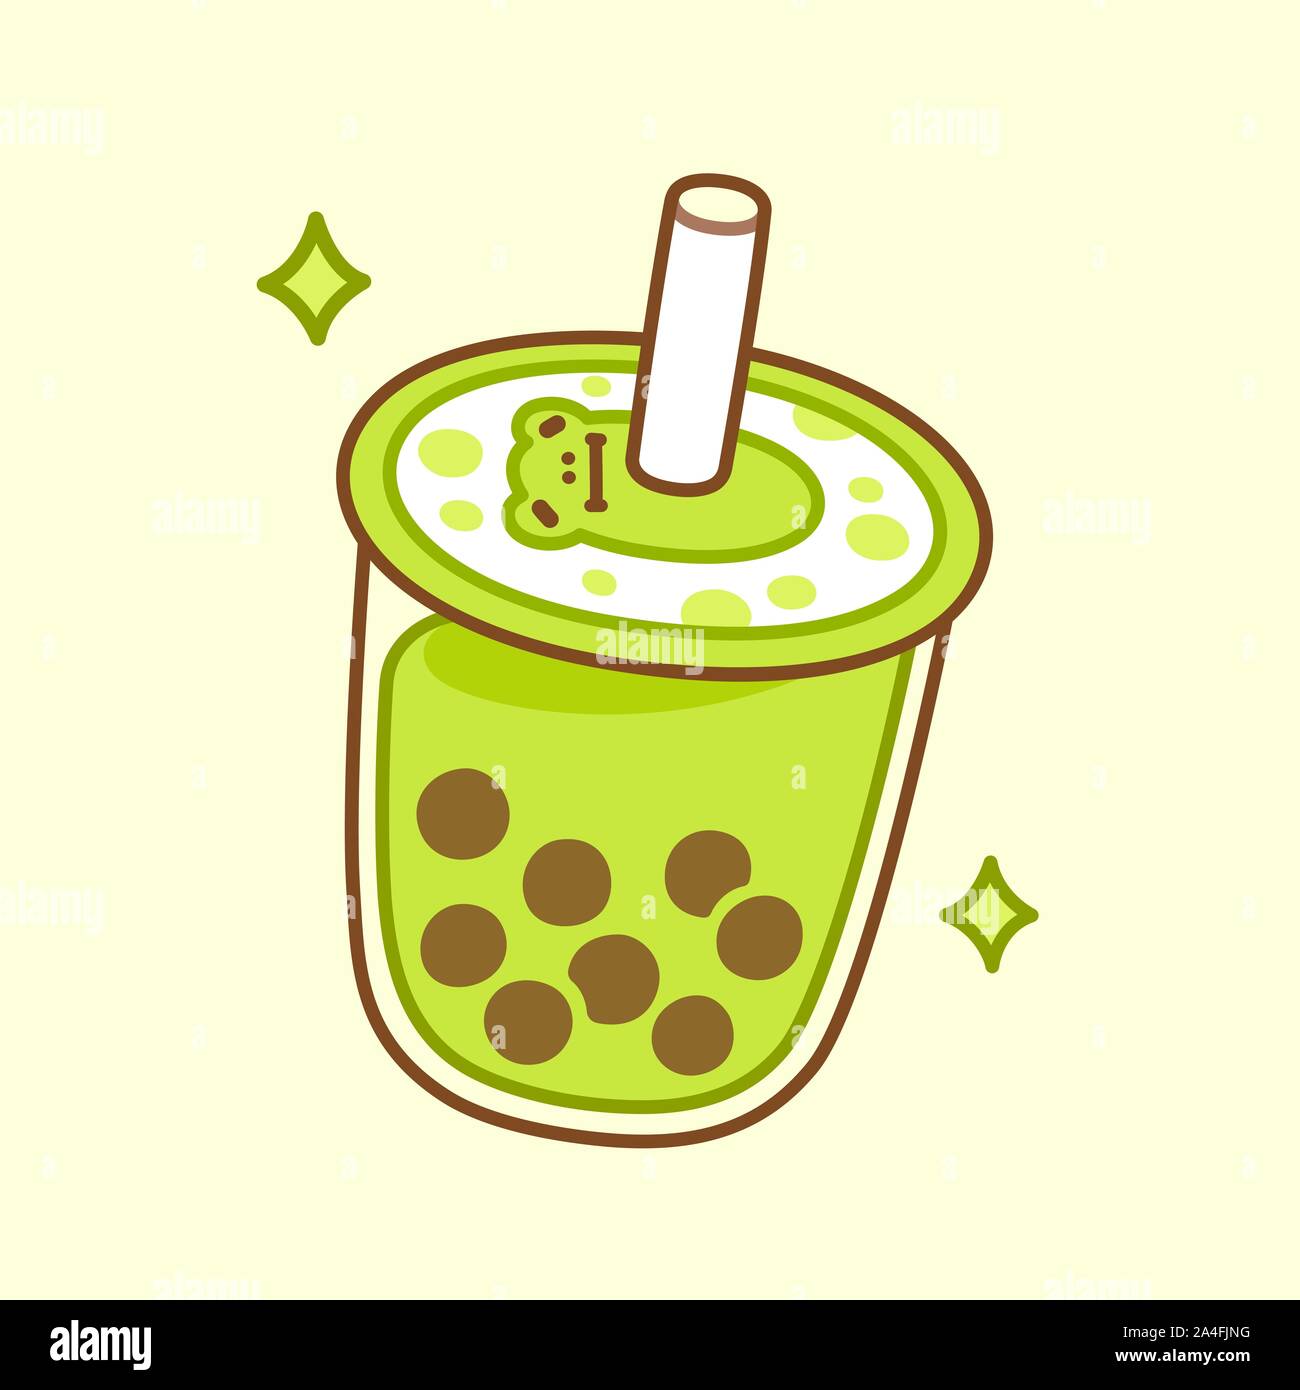 Cute Cartoon Green Bubble Tea Cup Drawing Matcha Milk Smoothie With Tapioca Pearls And Kawaii Frog Mascot Hand Drawn Boba Tea Drink Vector Illustrat Stock Vector Image Art Alamy